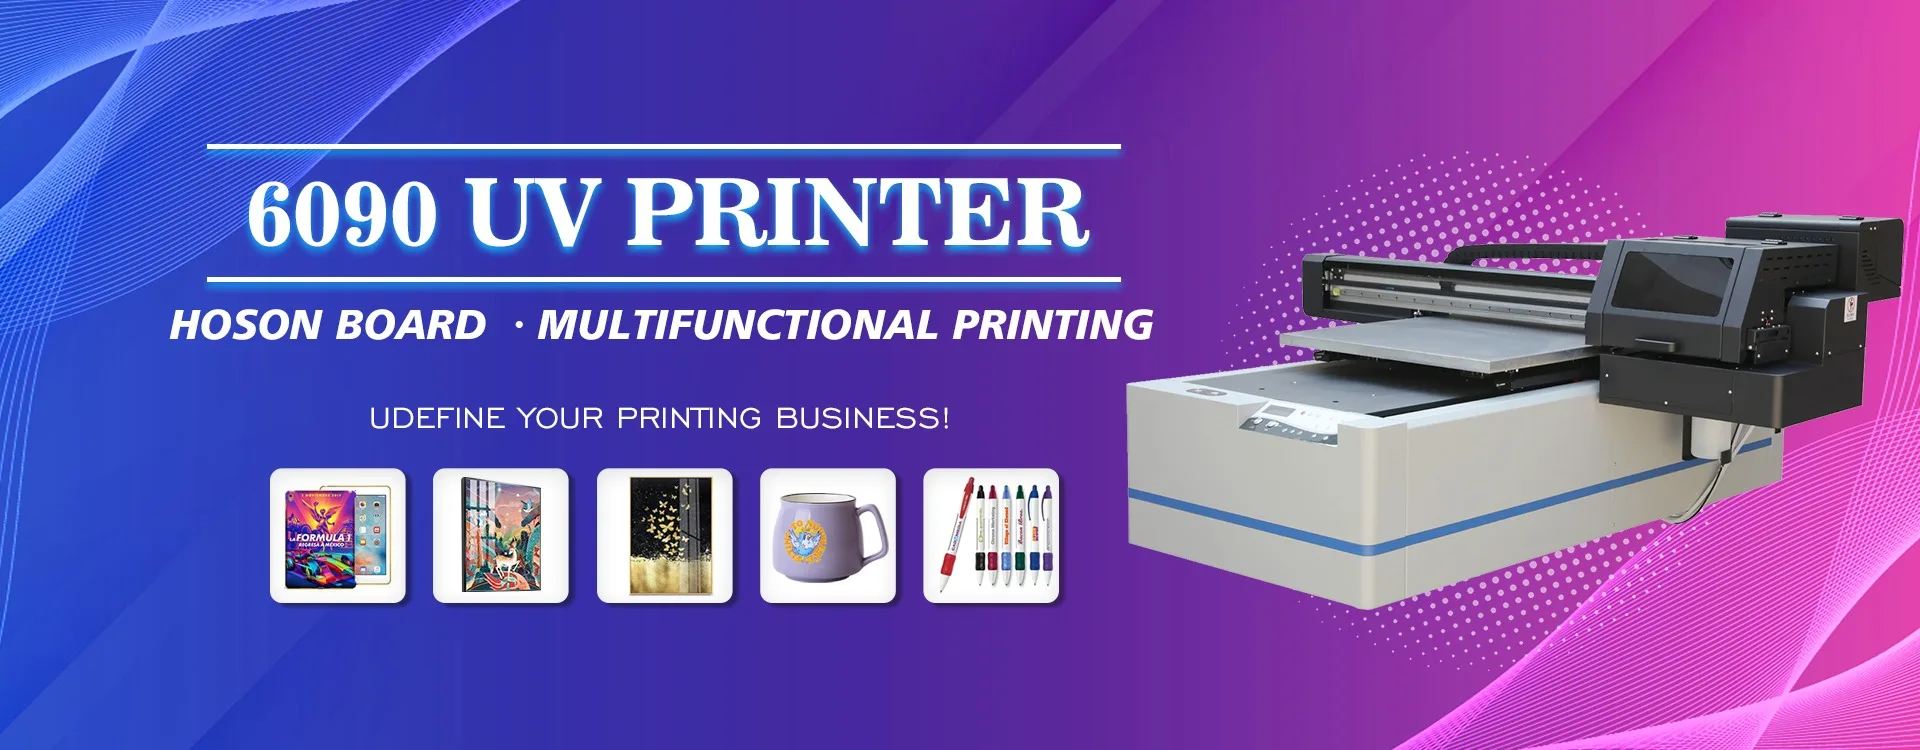 6090 UV Printer for Crystal label printing